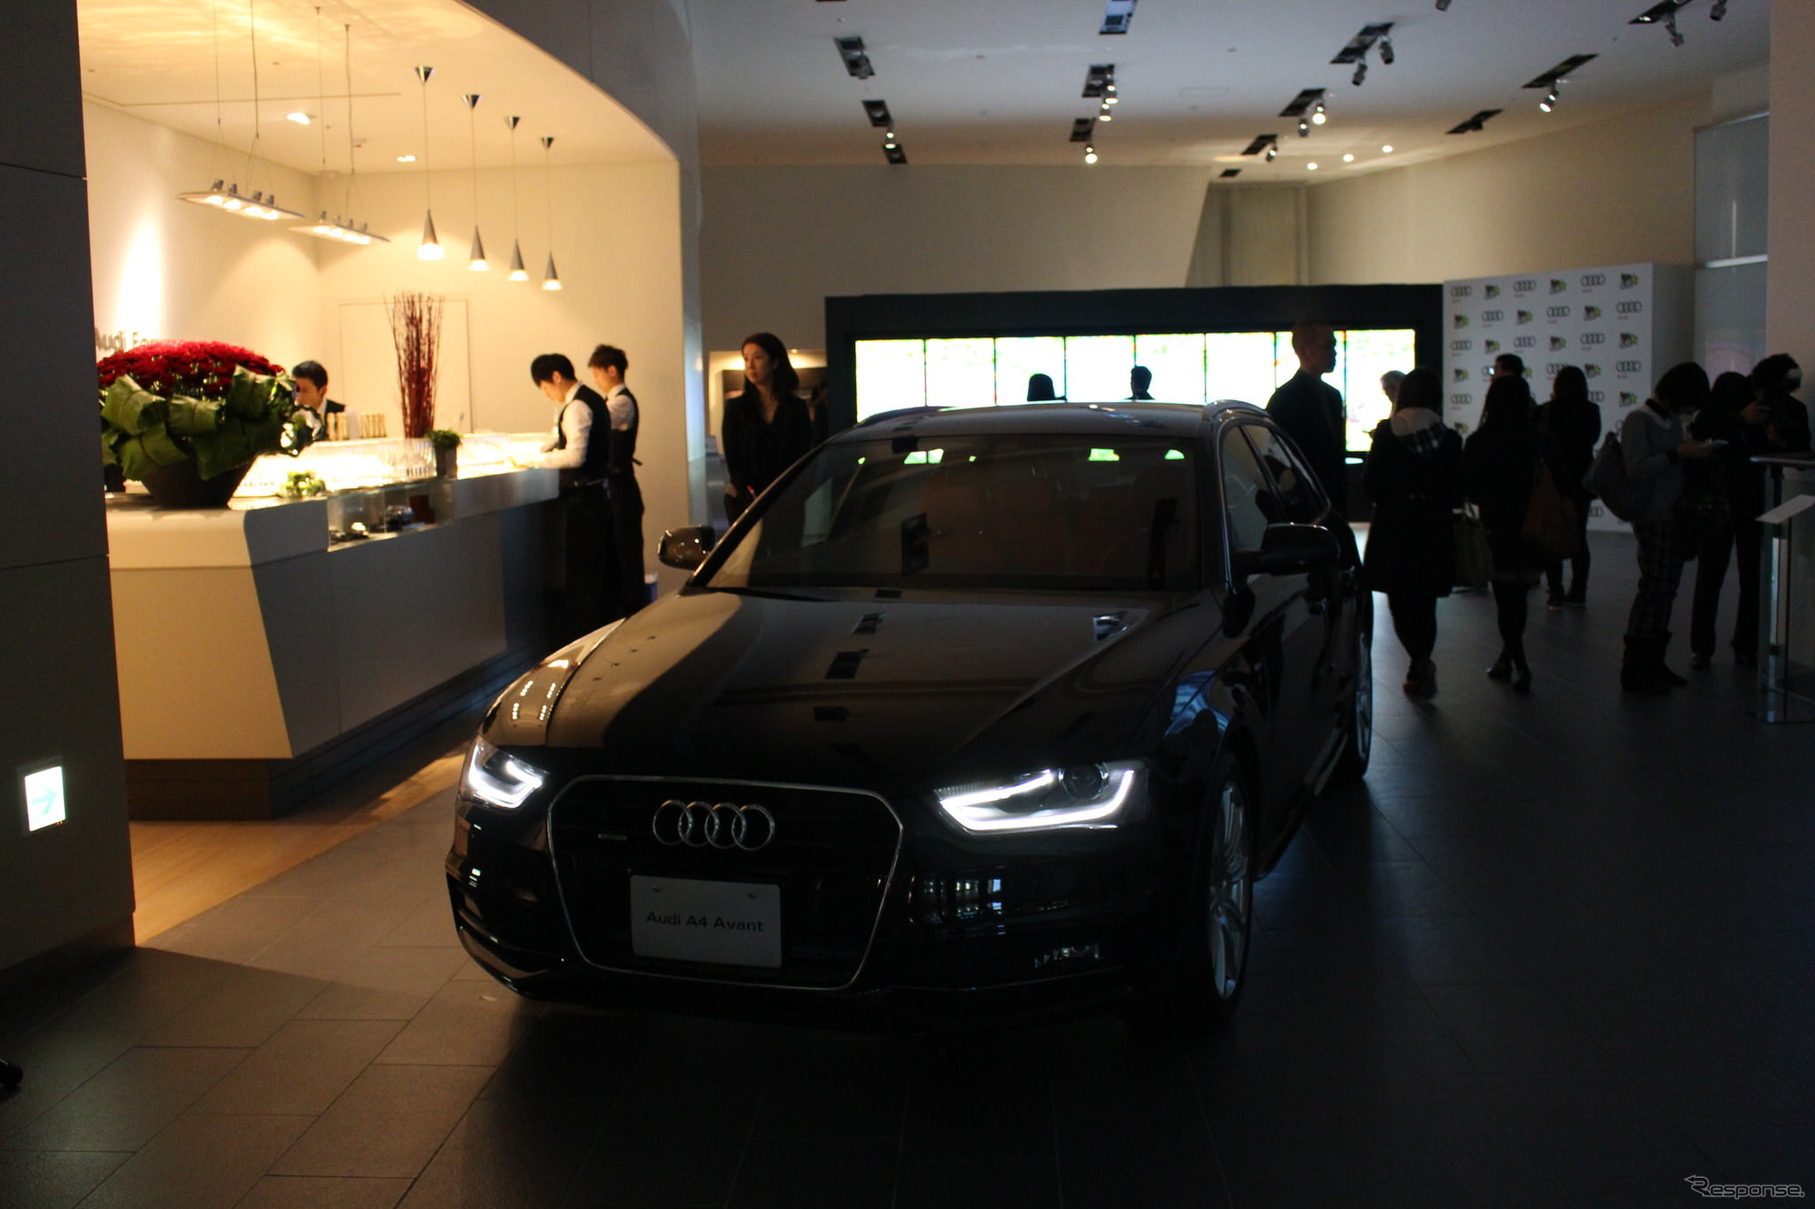 teamLab exhibit at Audi Forum Tokyo